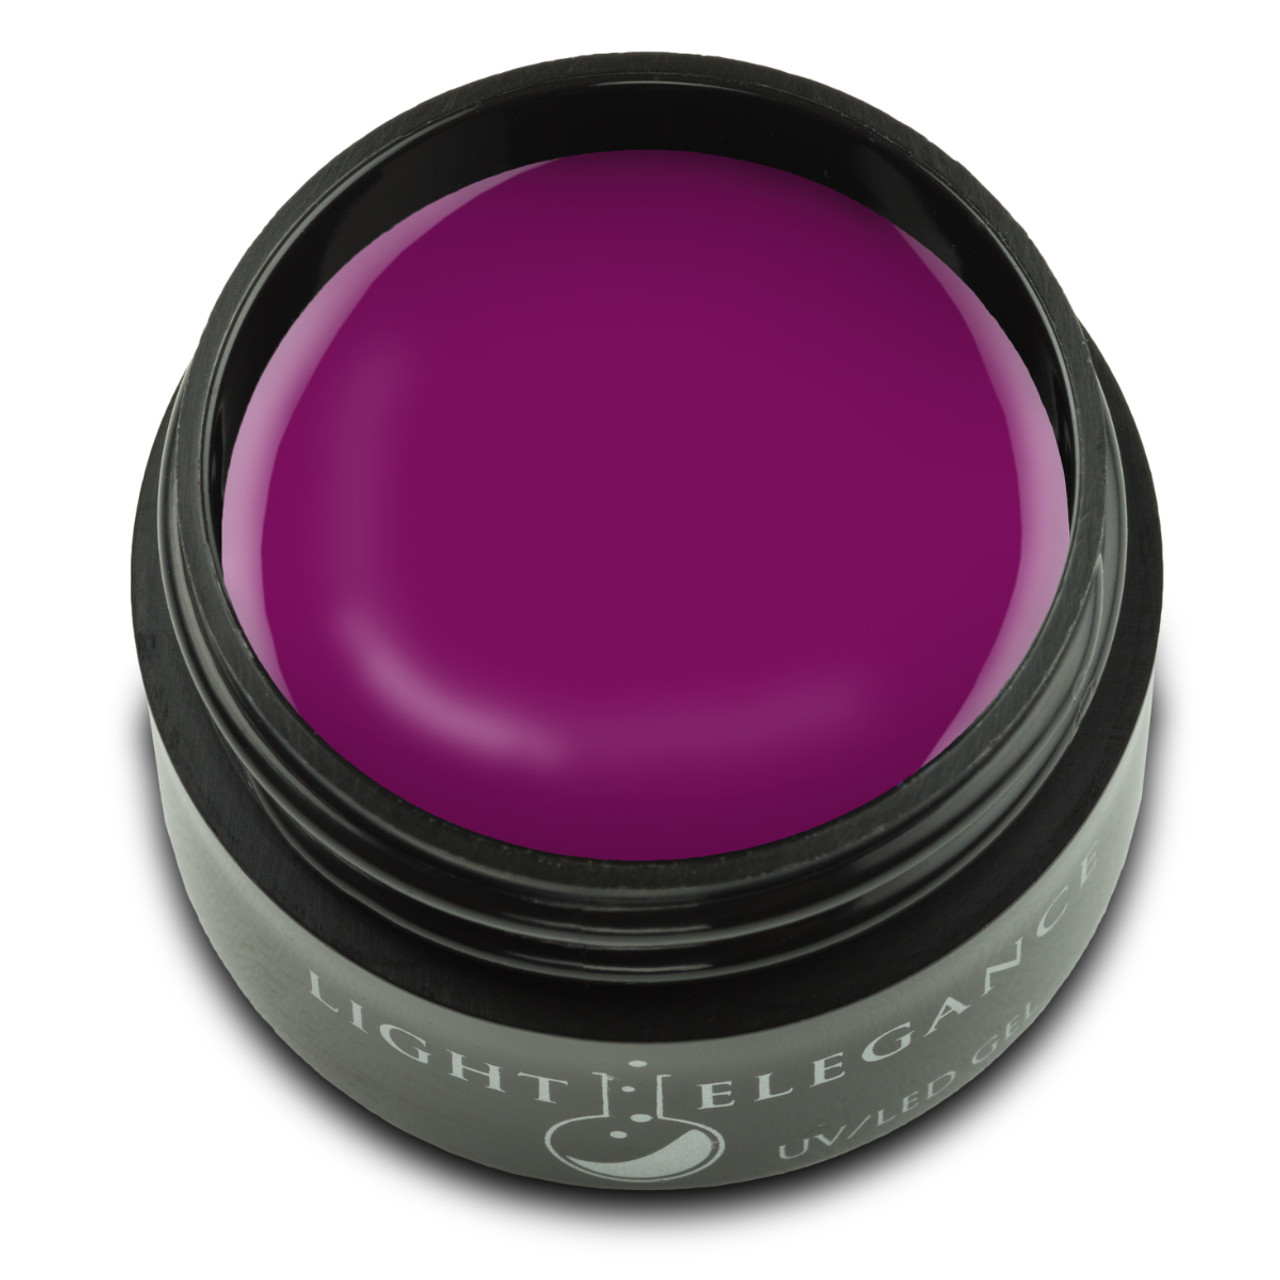 Light Elegance UV/LED Fashionably Late Color Gel - .57 oz (17 ml)